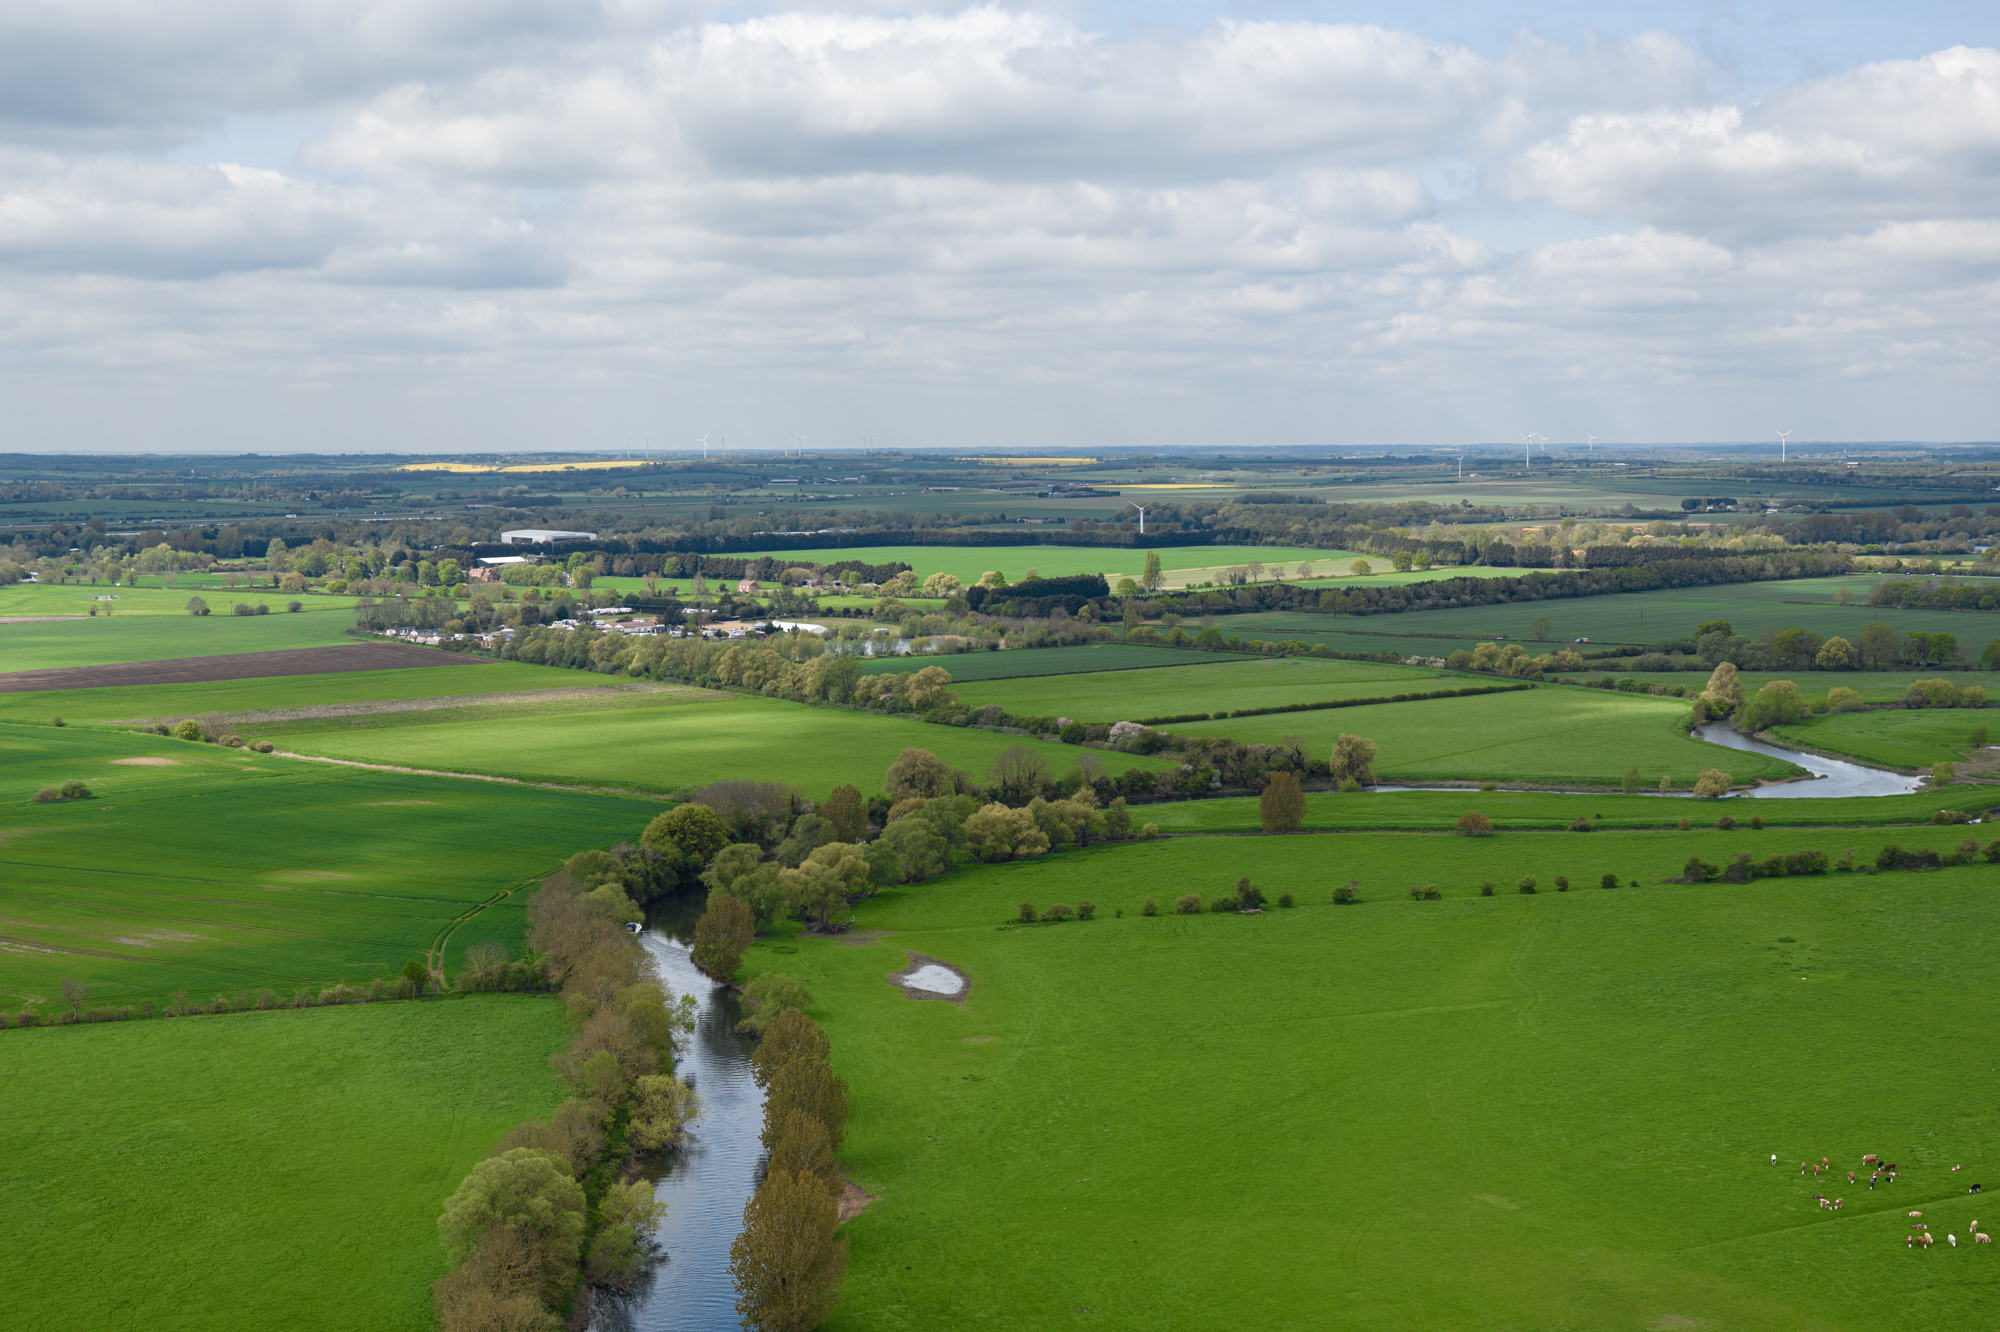 DJI Inspire 3 aerial image of rural landscape, fields